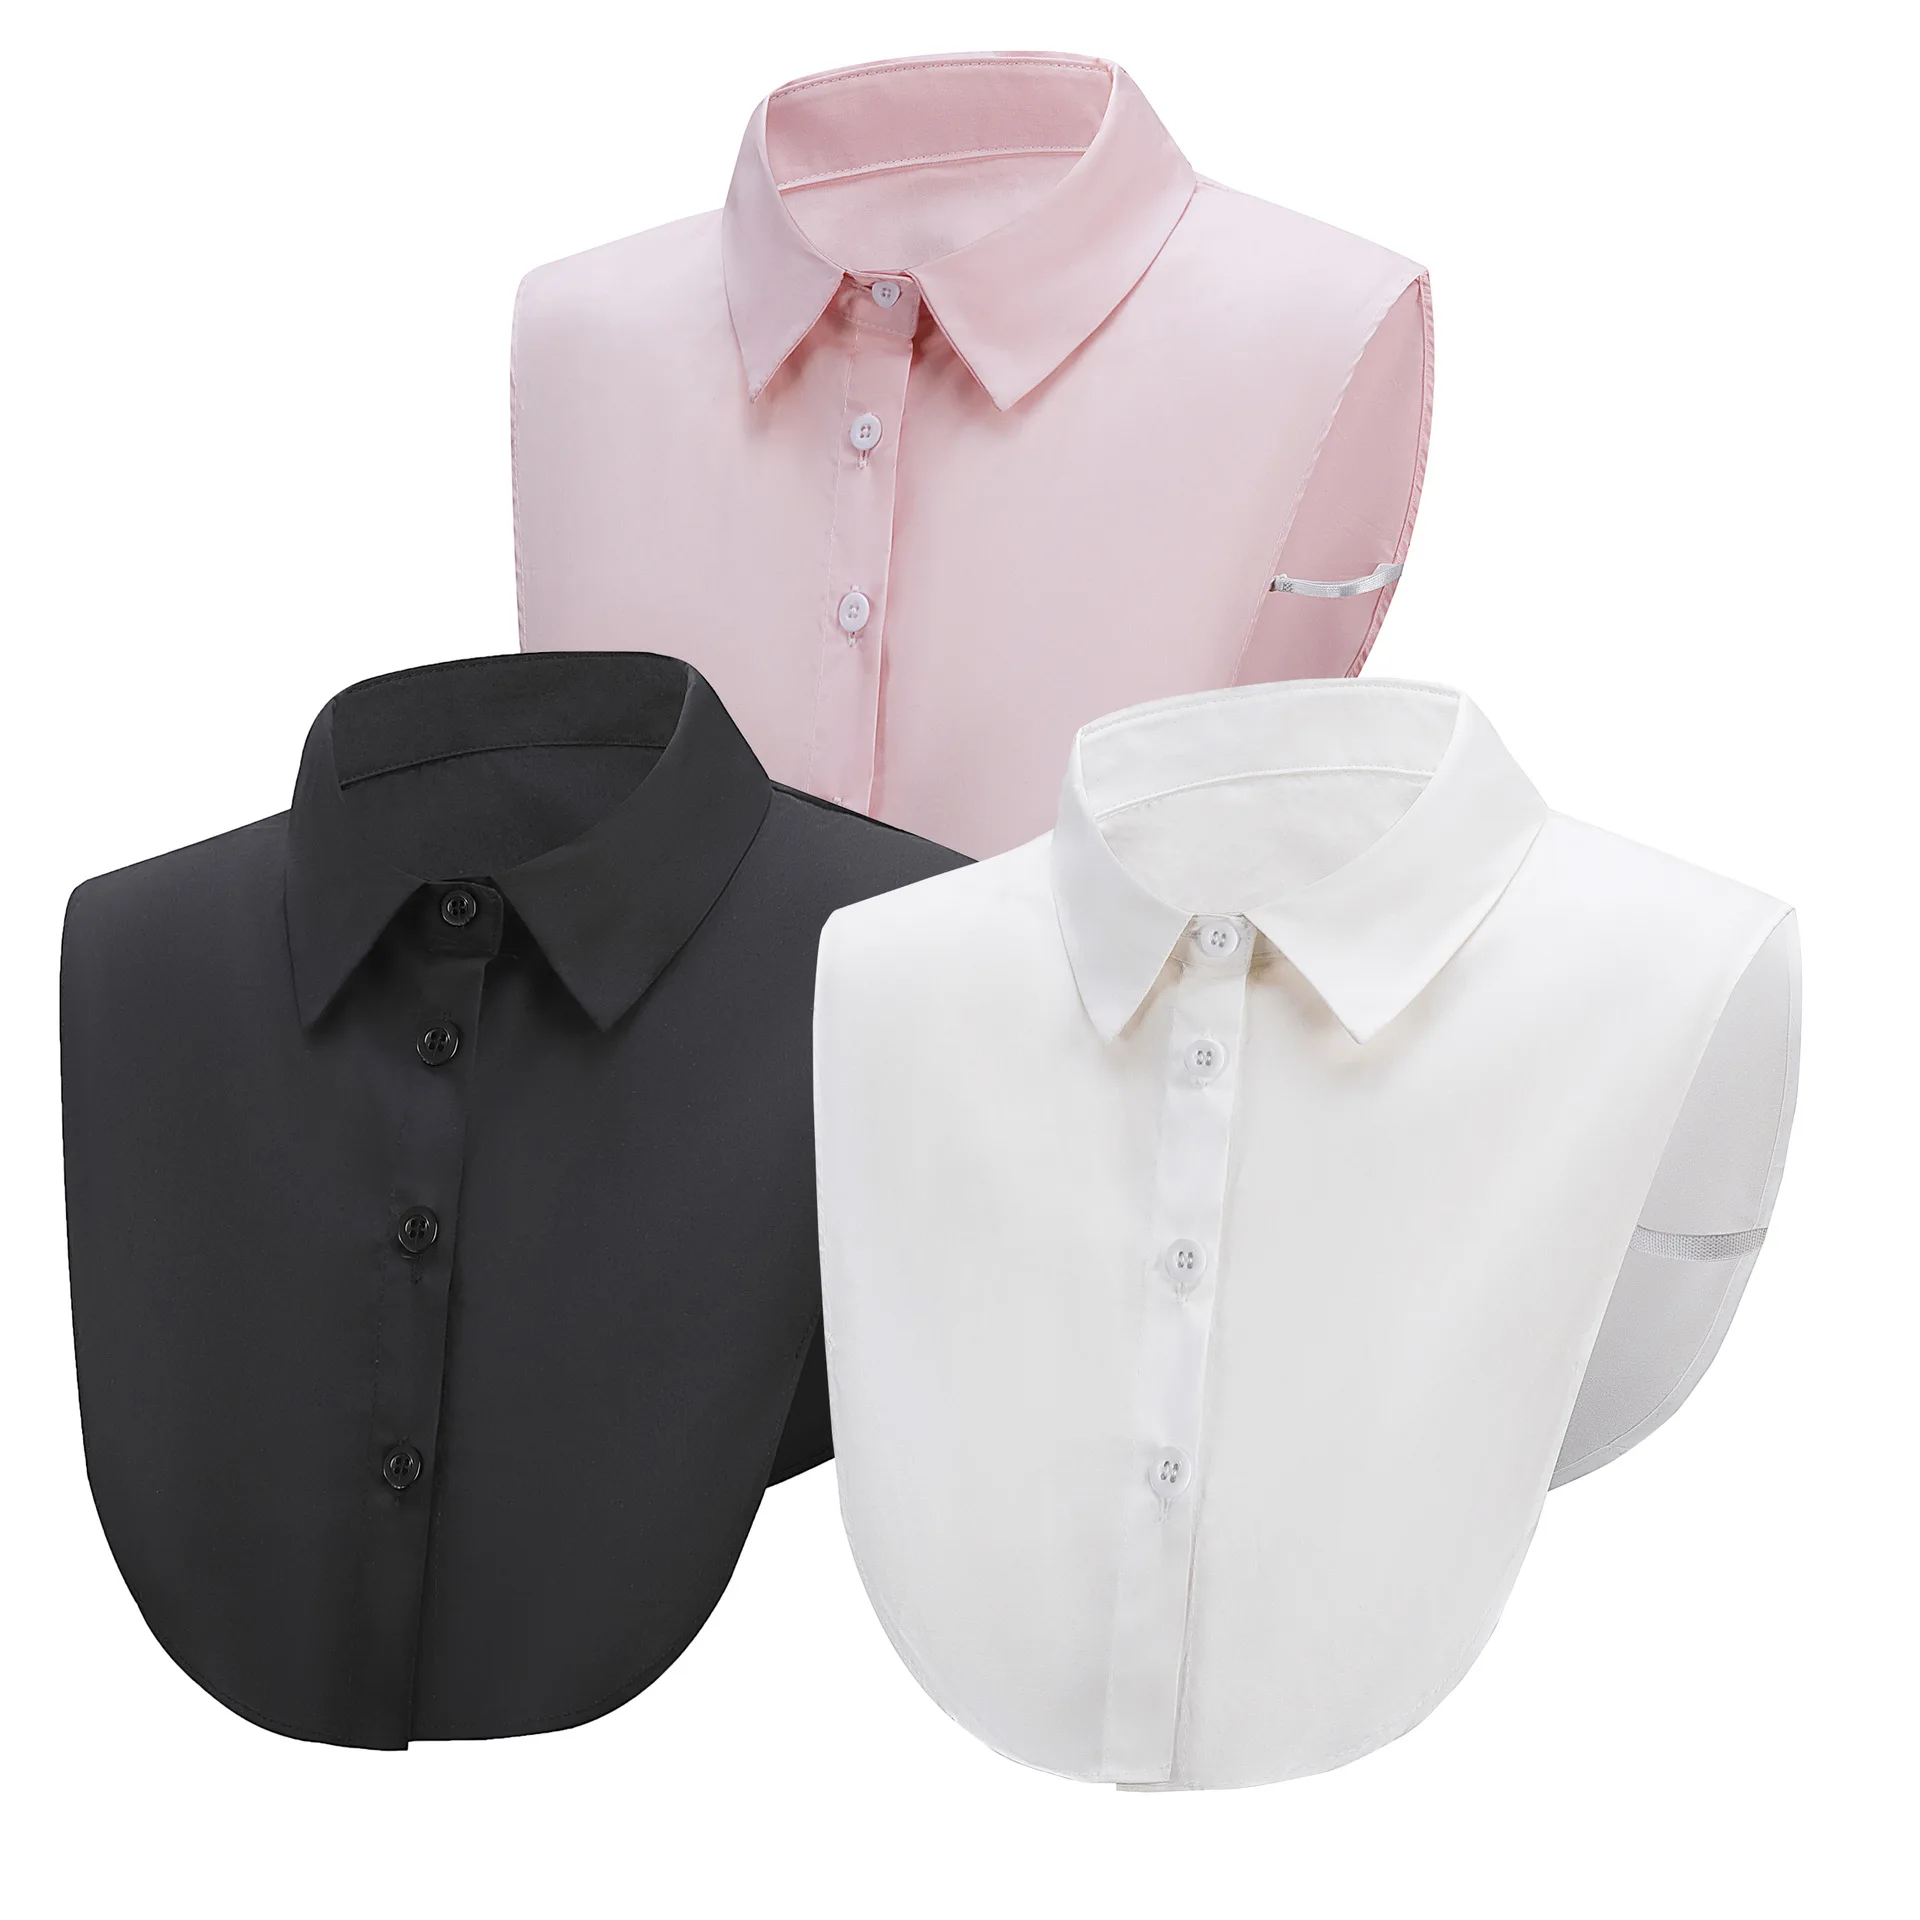 Fake Collar for Shirt Detachable Collars Solid Shirt Lapel Blouse Top Shirt for Men Women Black White Clothes Shirt Accessories